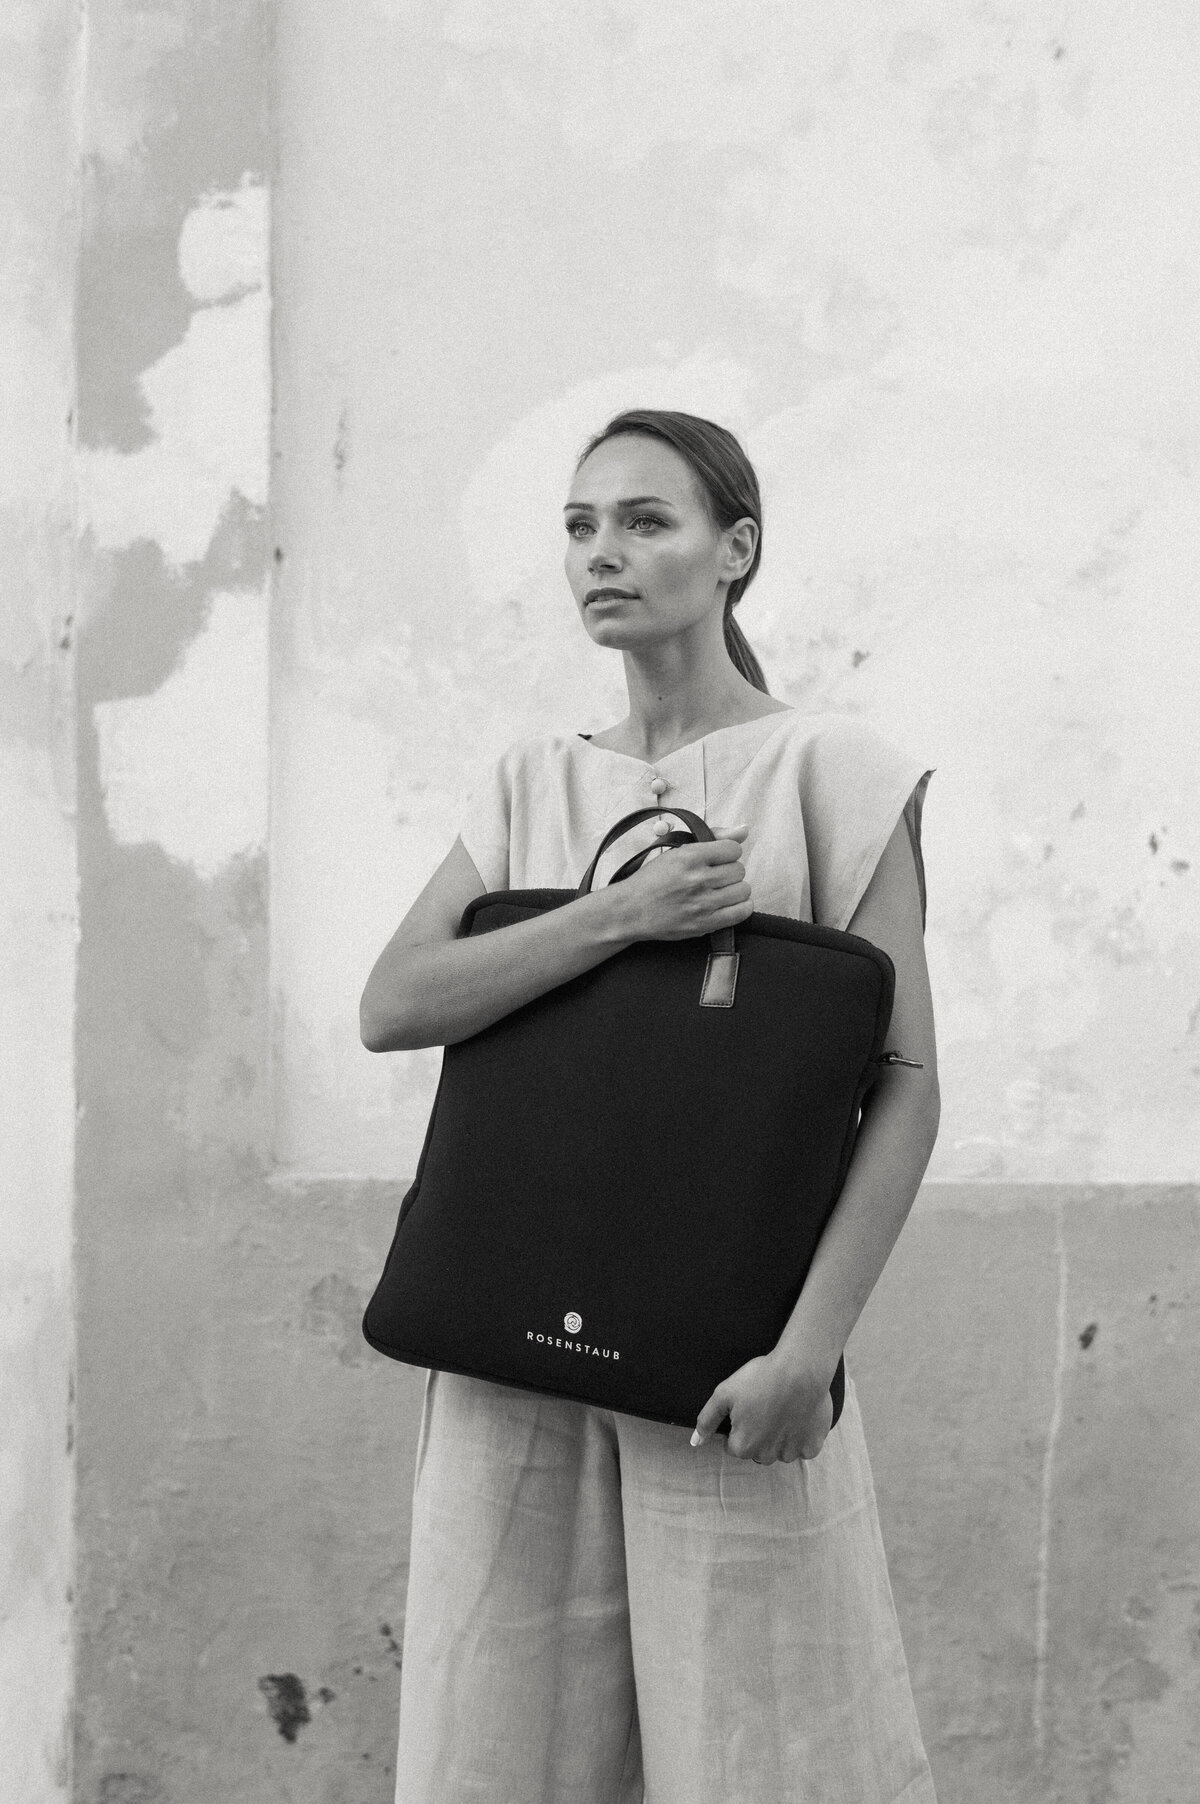 Rosenstaub Bags - Campaign Photoshoot Ibiza by Avieta